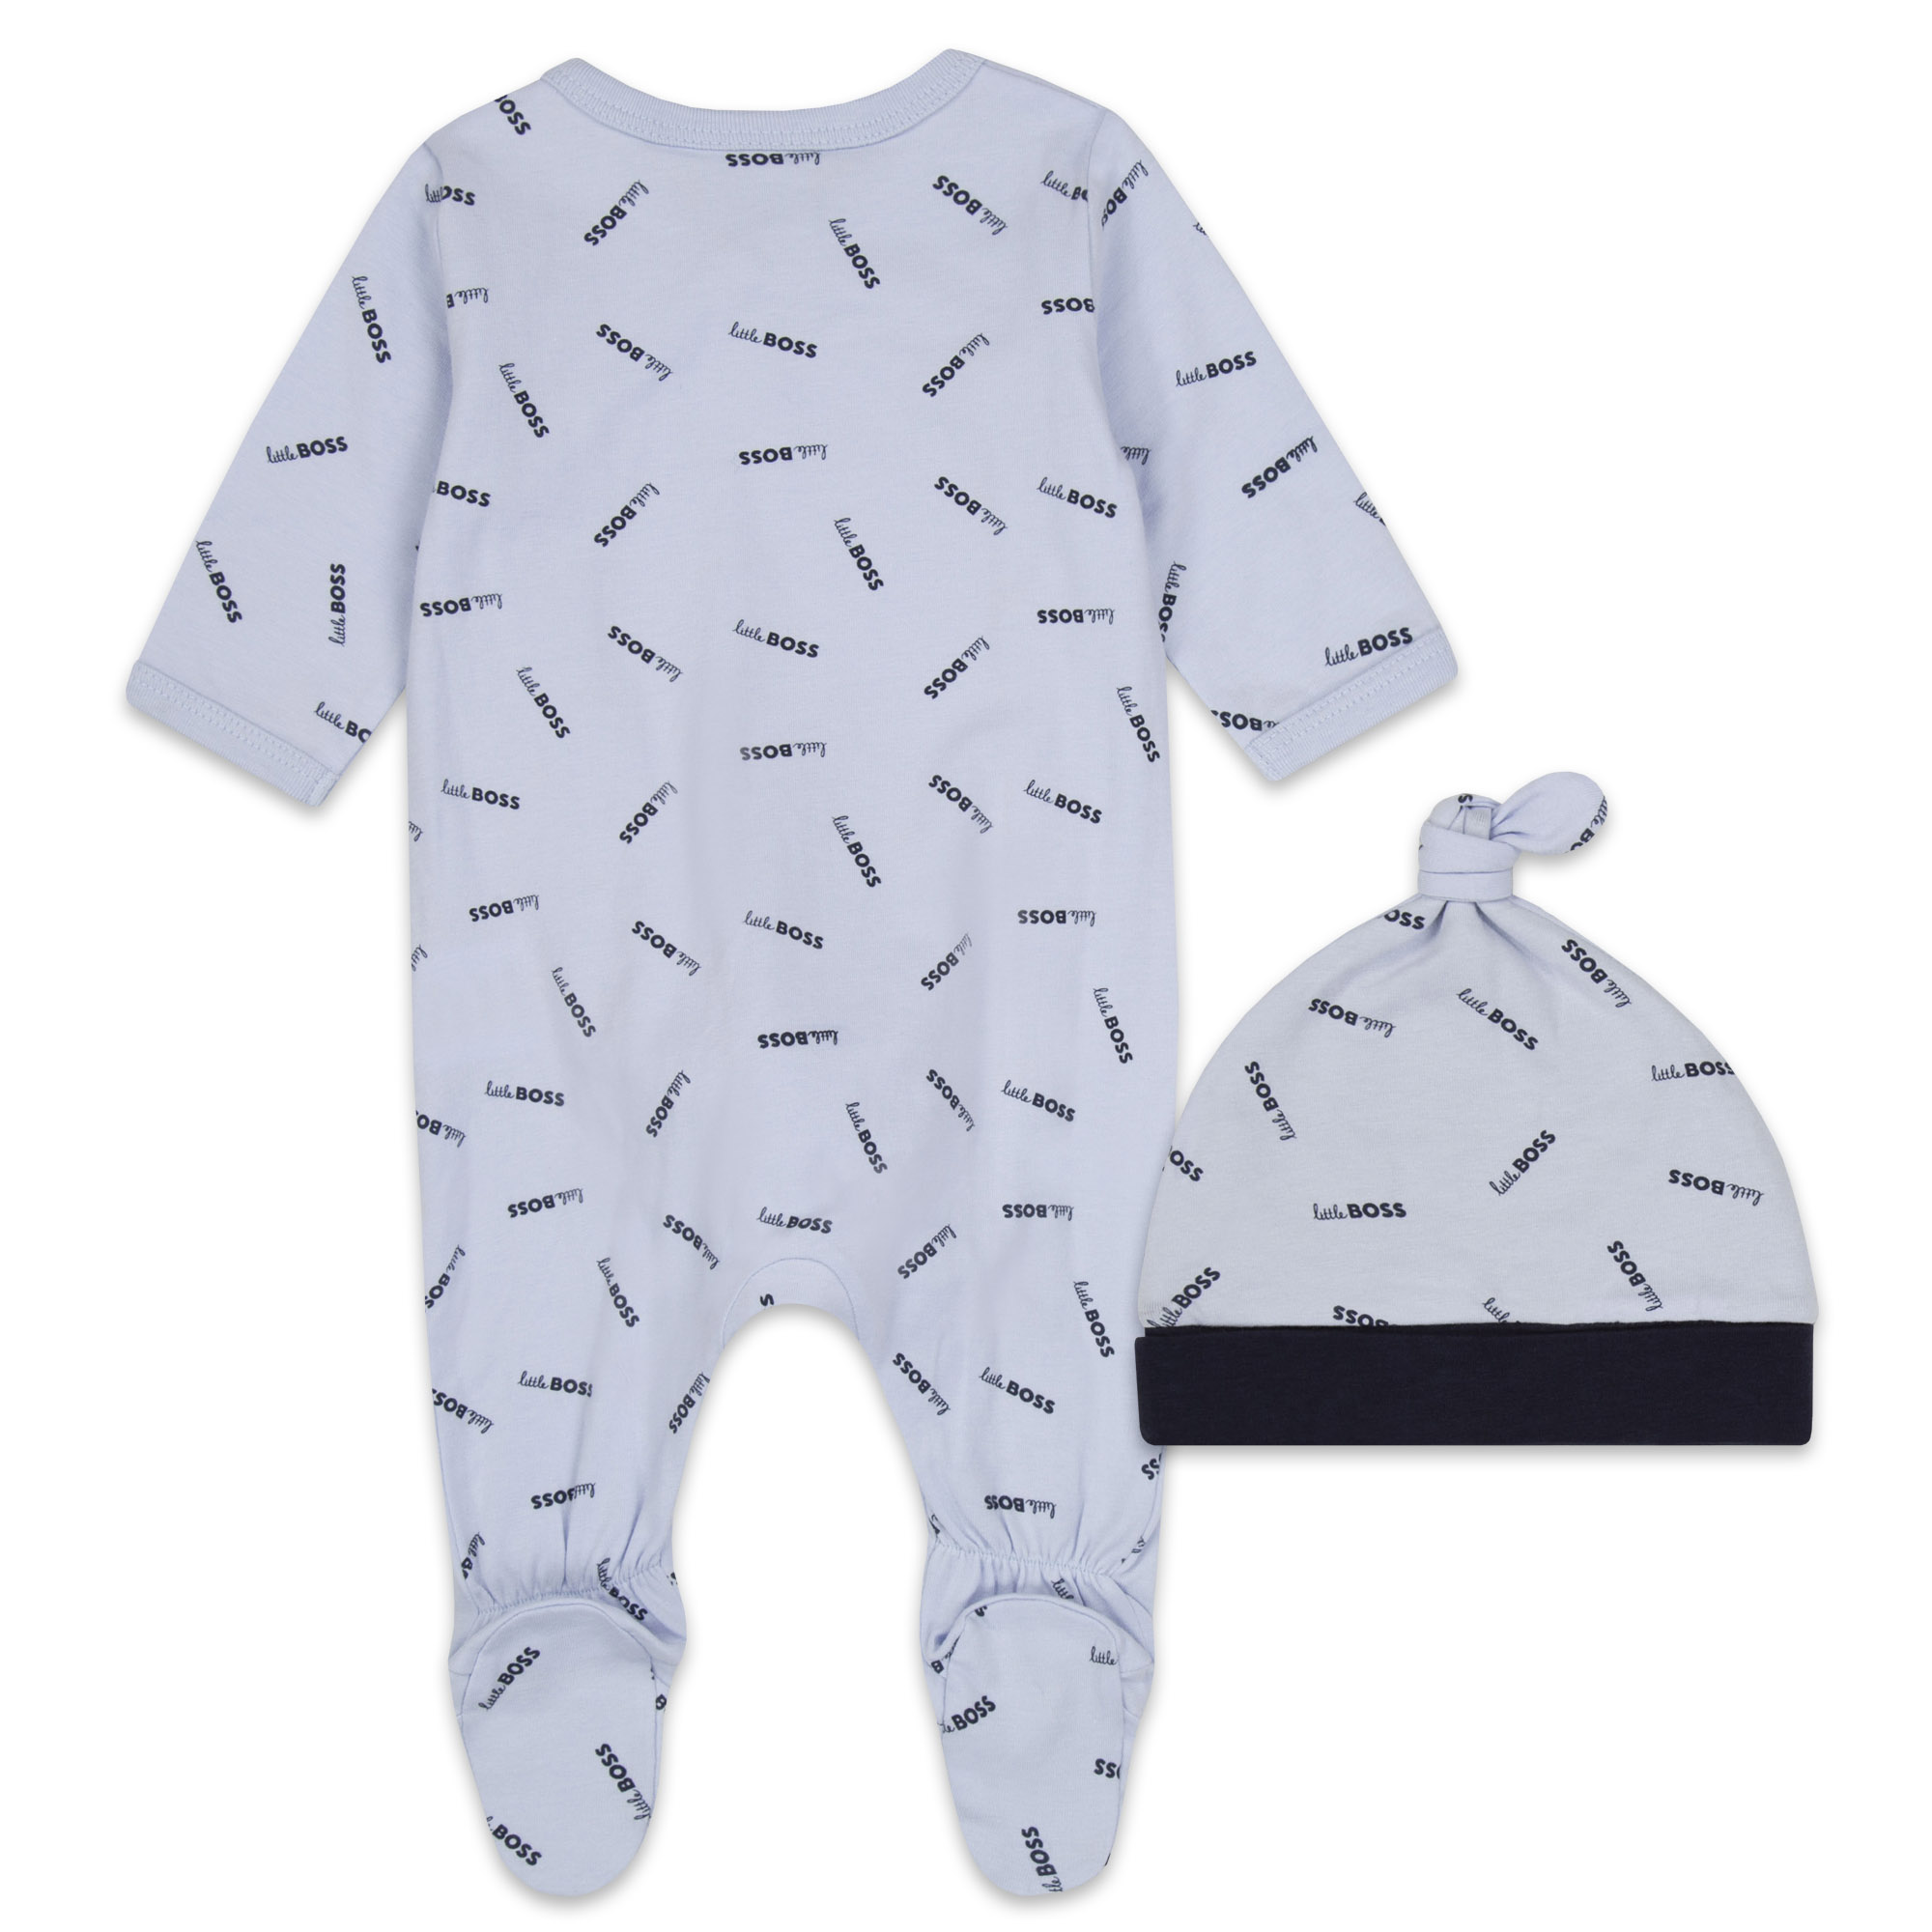 Matching pyjamas + hat set BOSS for BOY